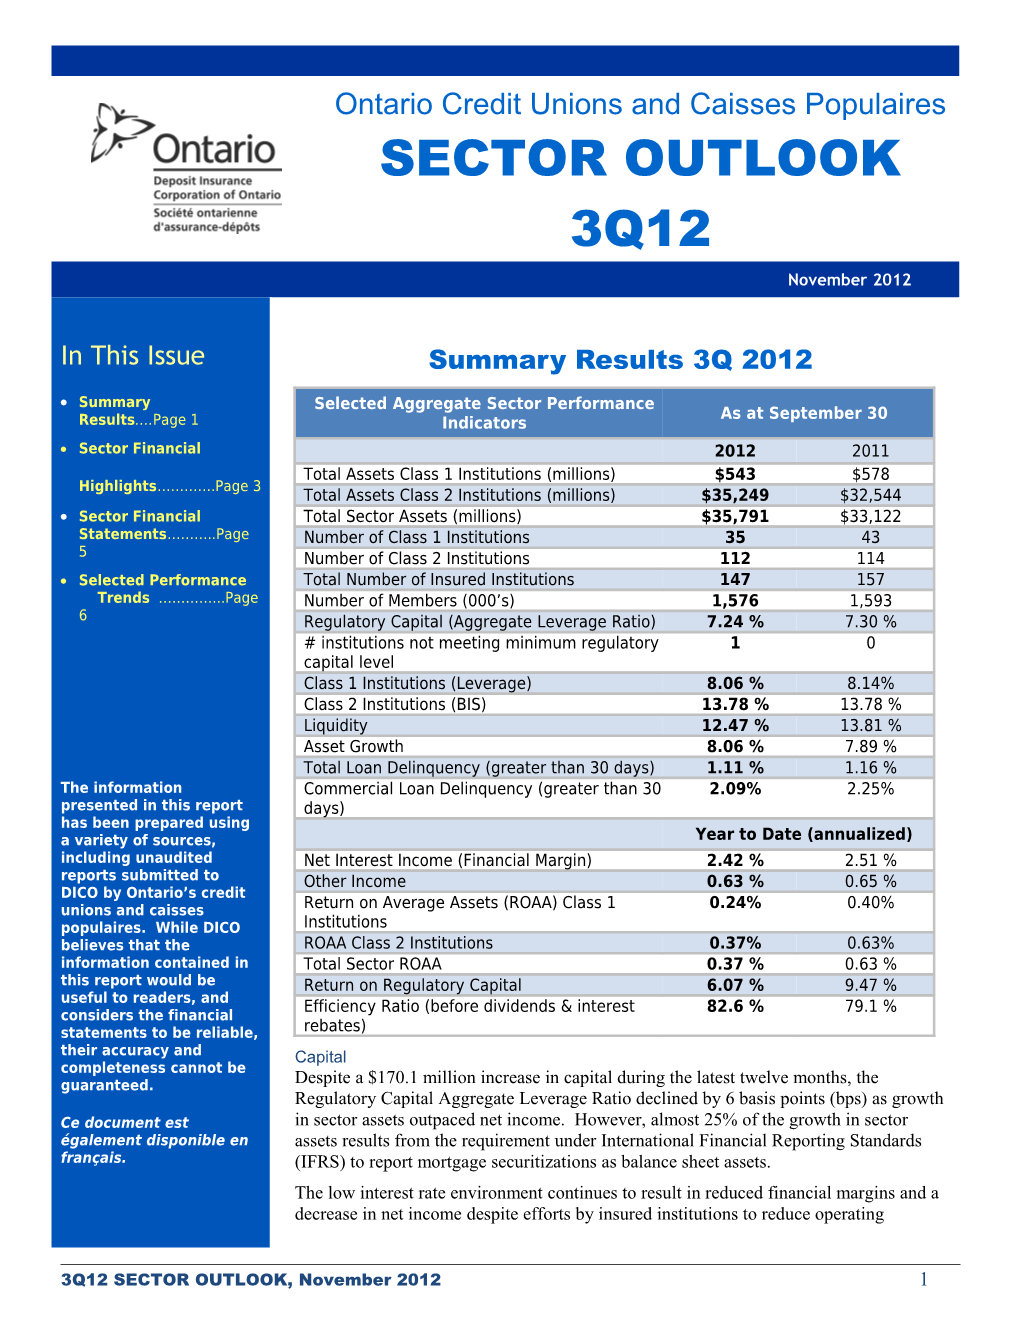 Summary Results 3Q 2012